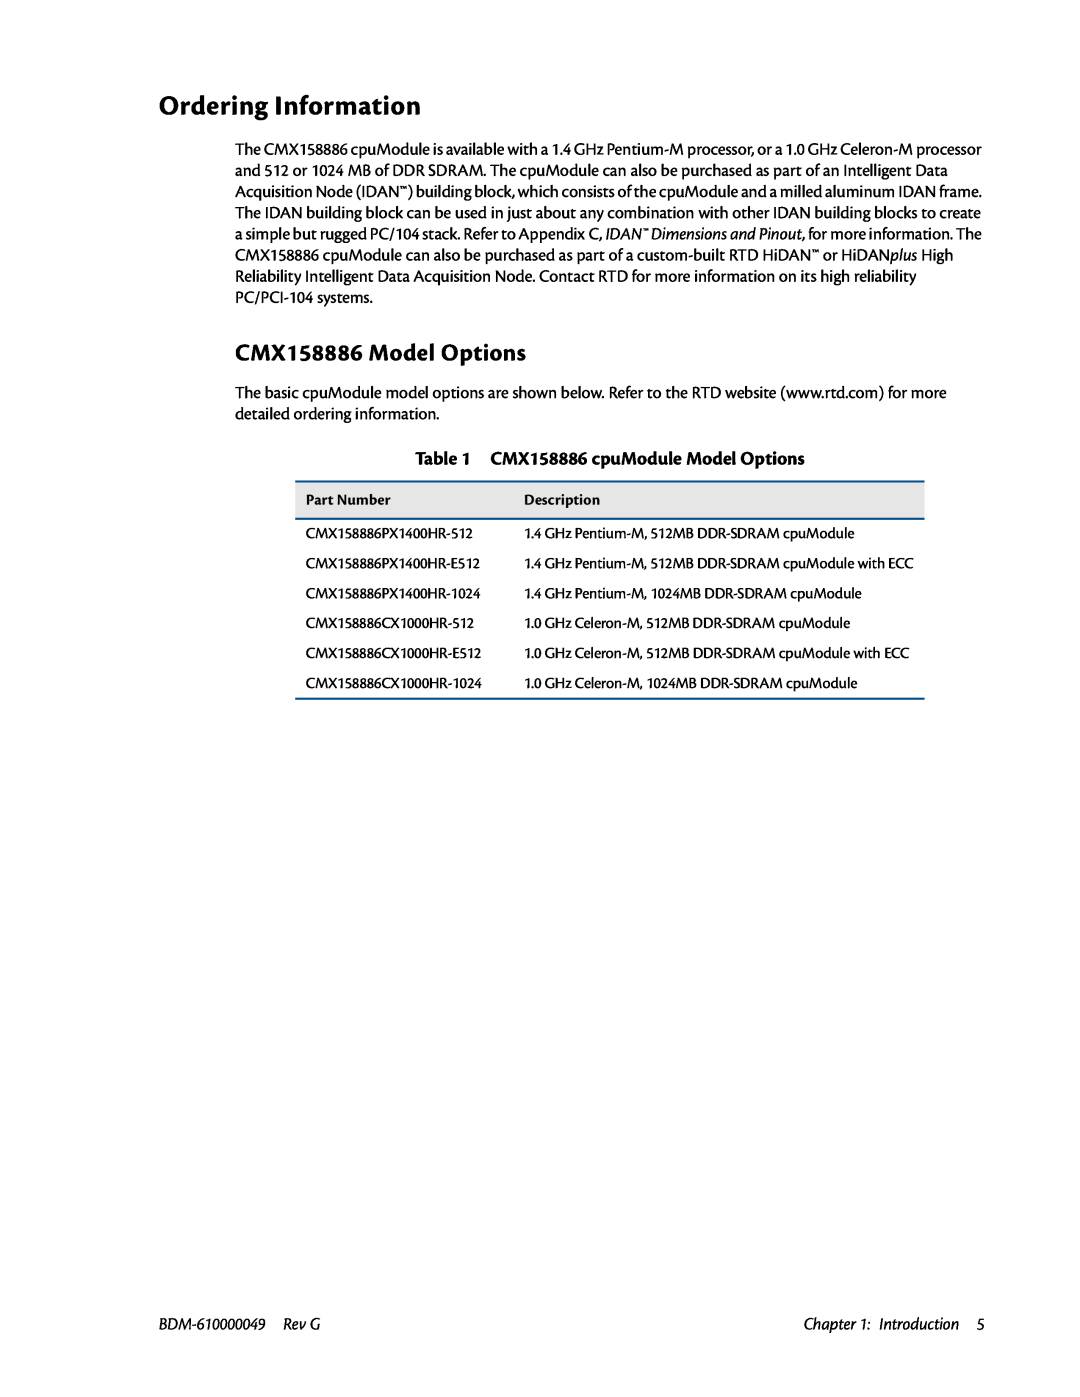 IBM BDM-610000049 Ordering Information, CMX158886 Model Options, CMX158886 cpuModule Model Options, Introduction 